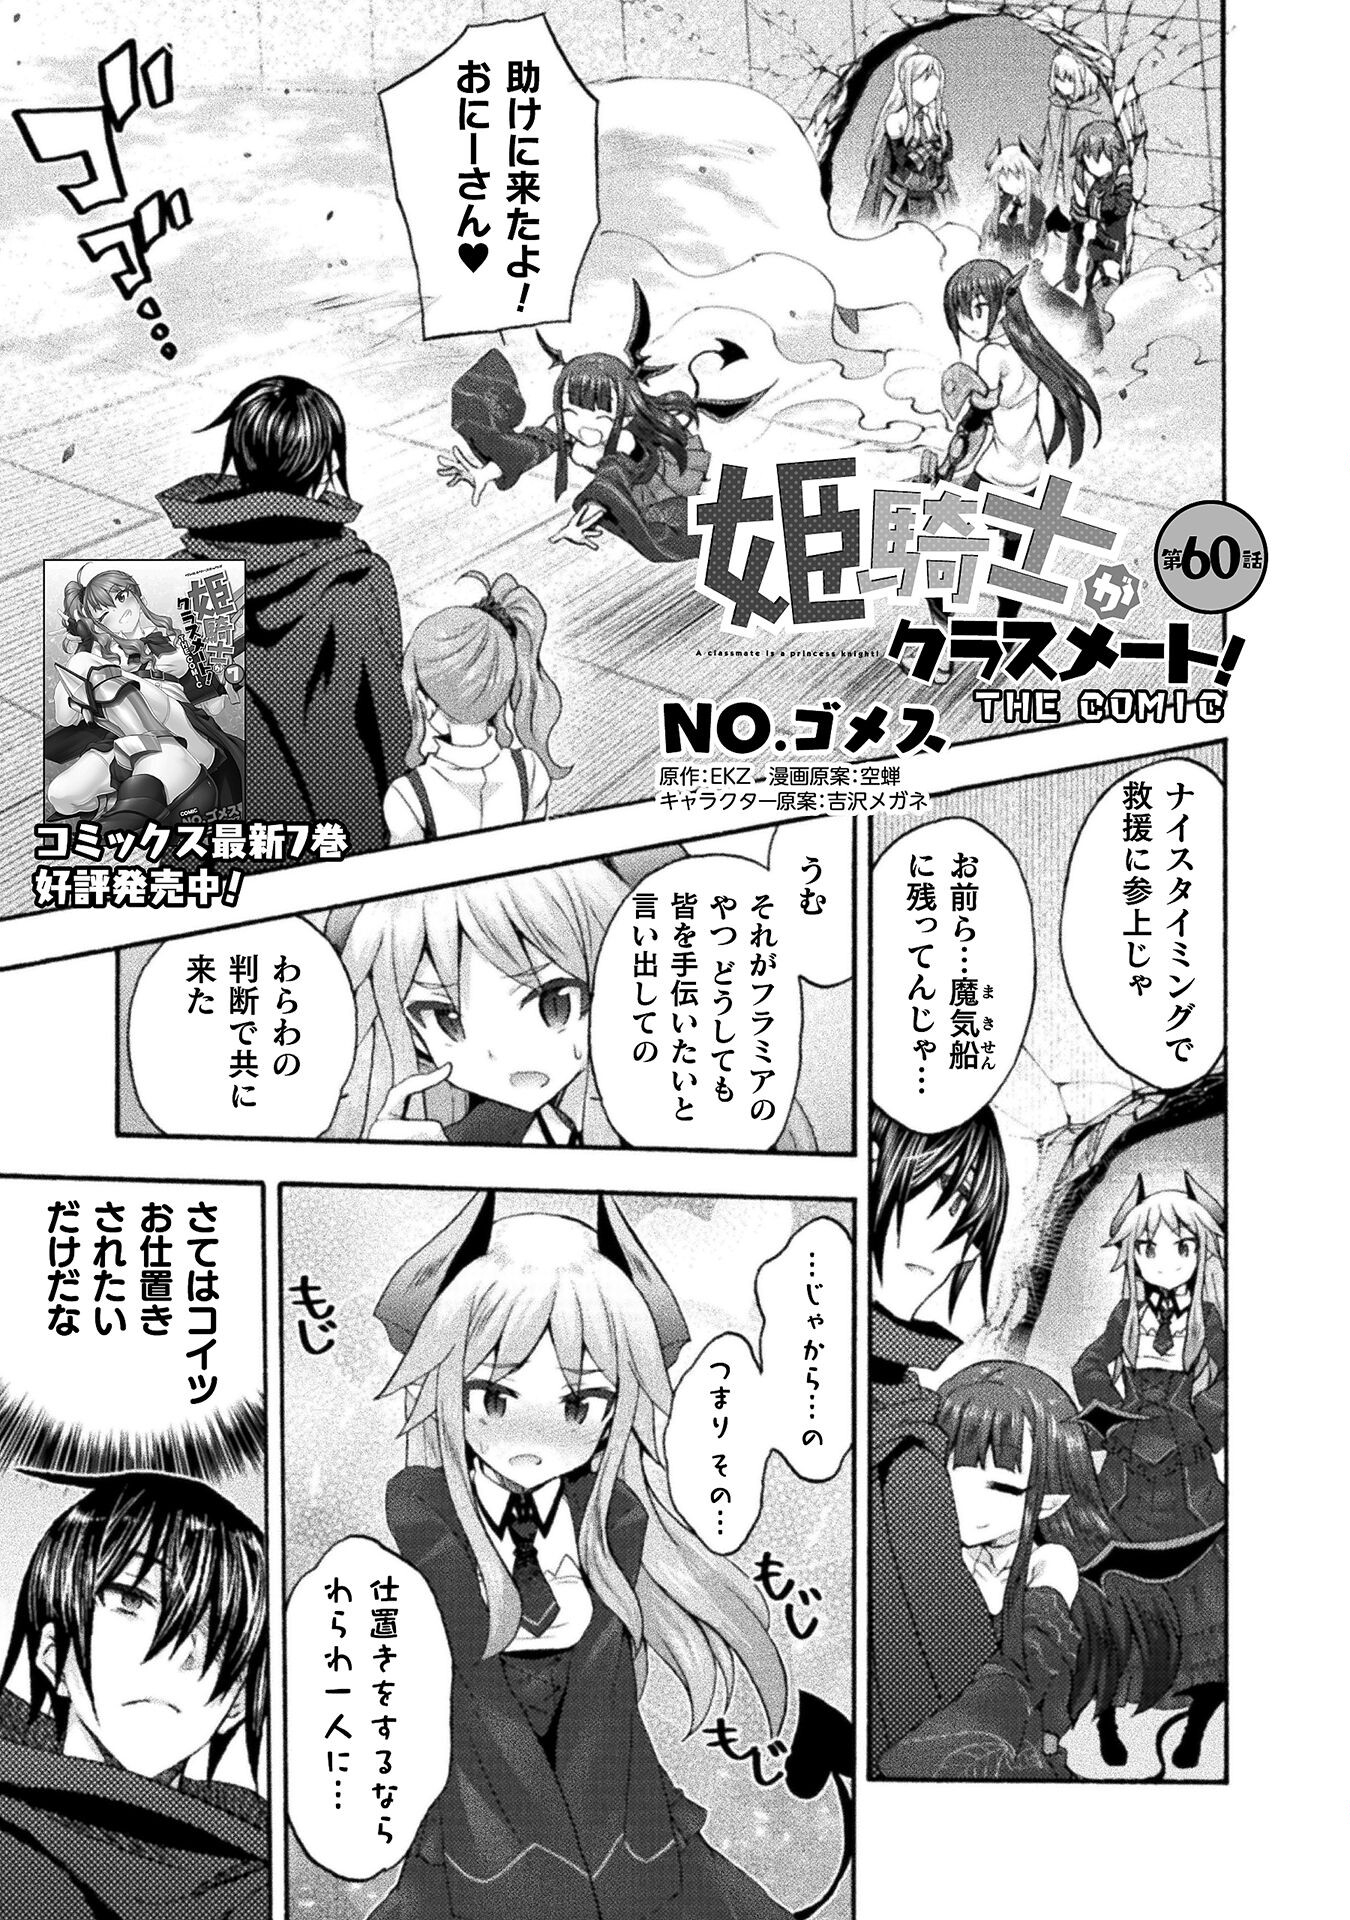 Himekishi ga Classmate! - Chapter 60 - Page 1